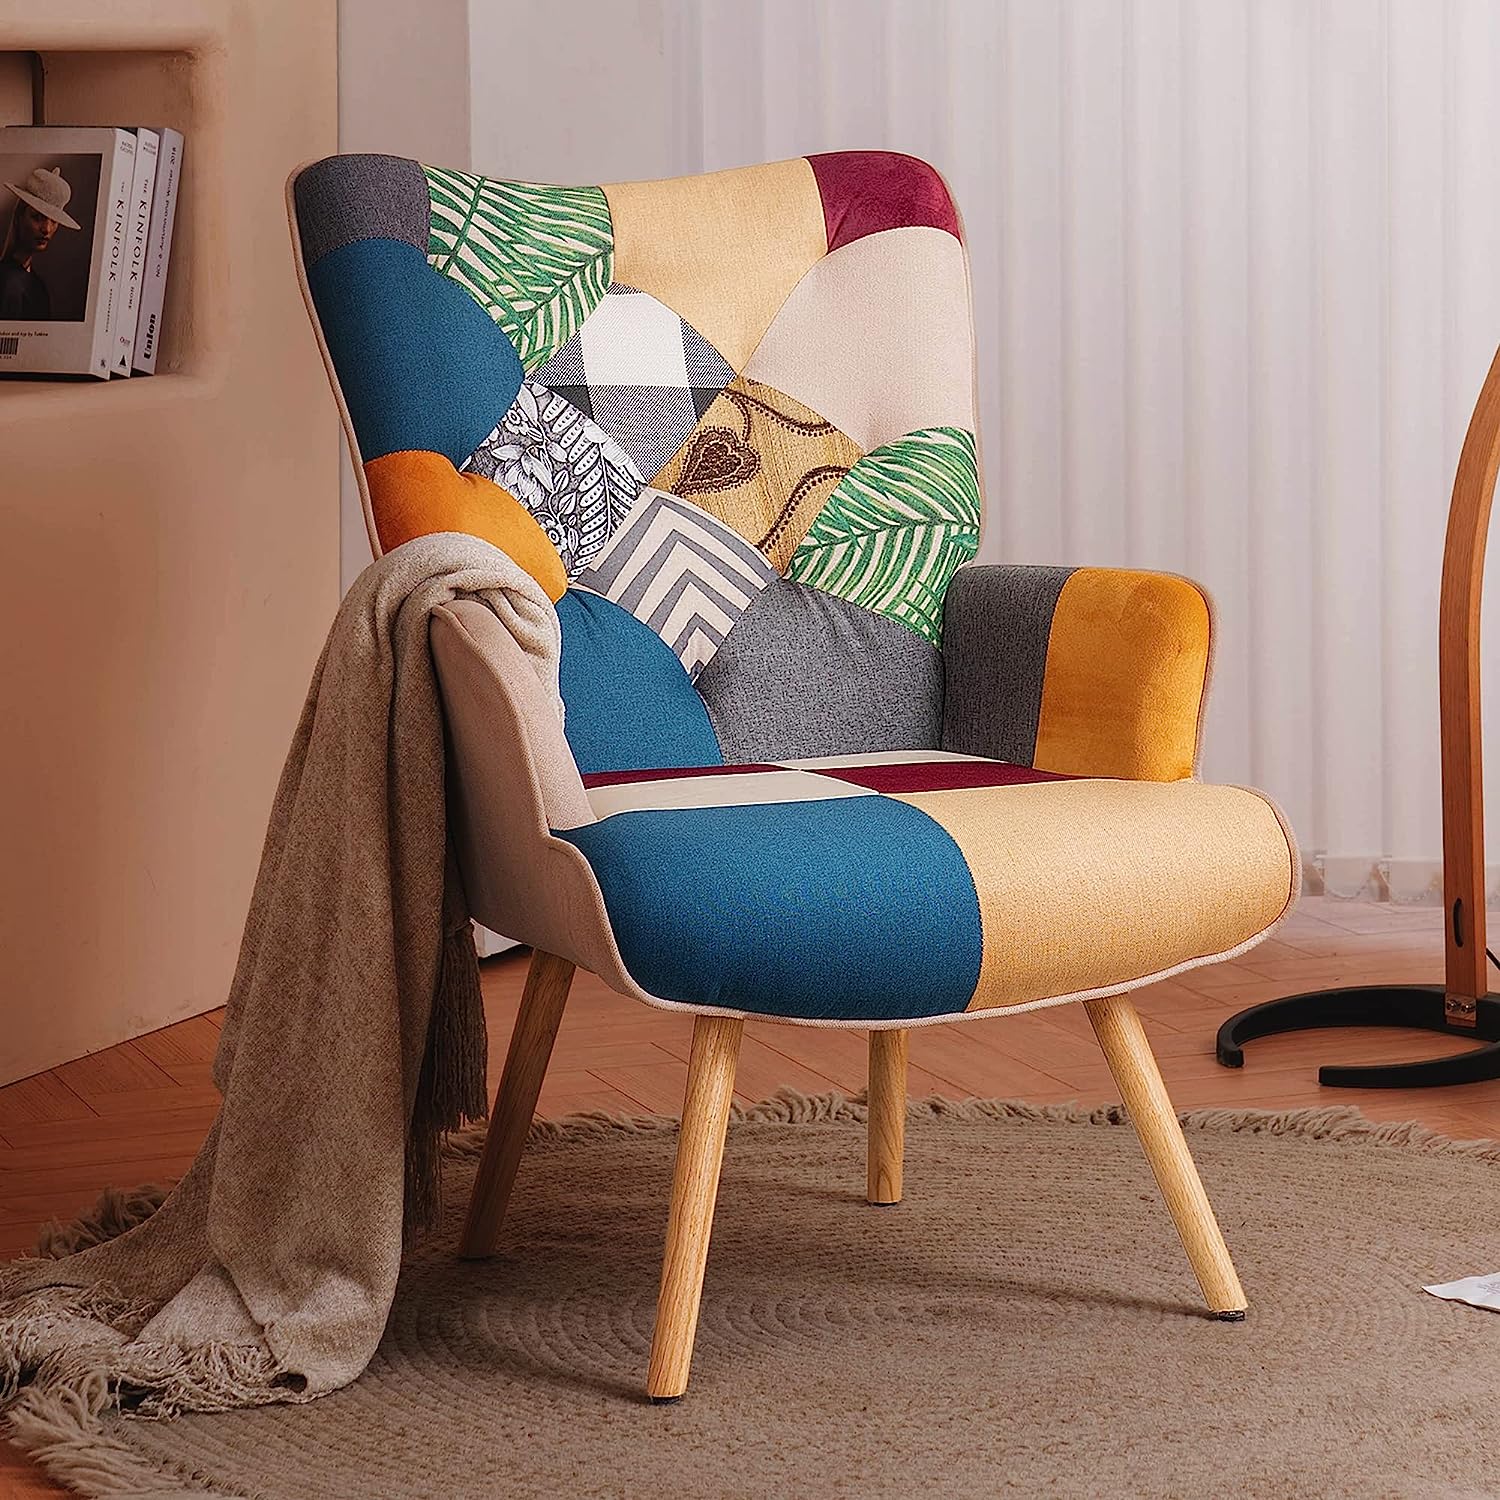 Joysoul Living Room Accent Chair Modern High Back Arm [...]